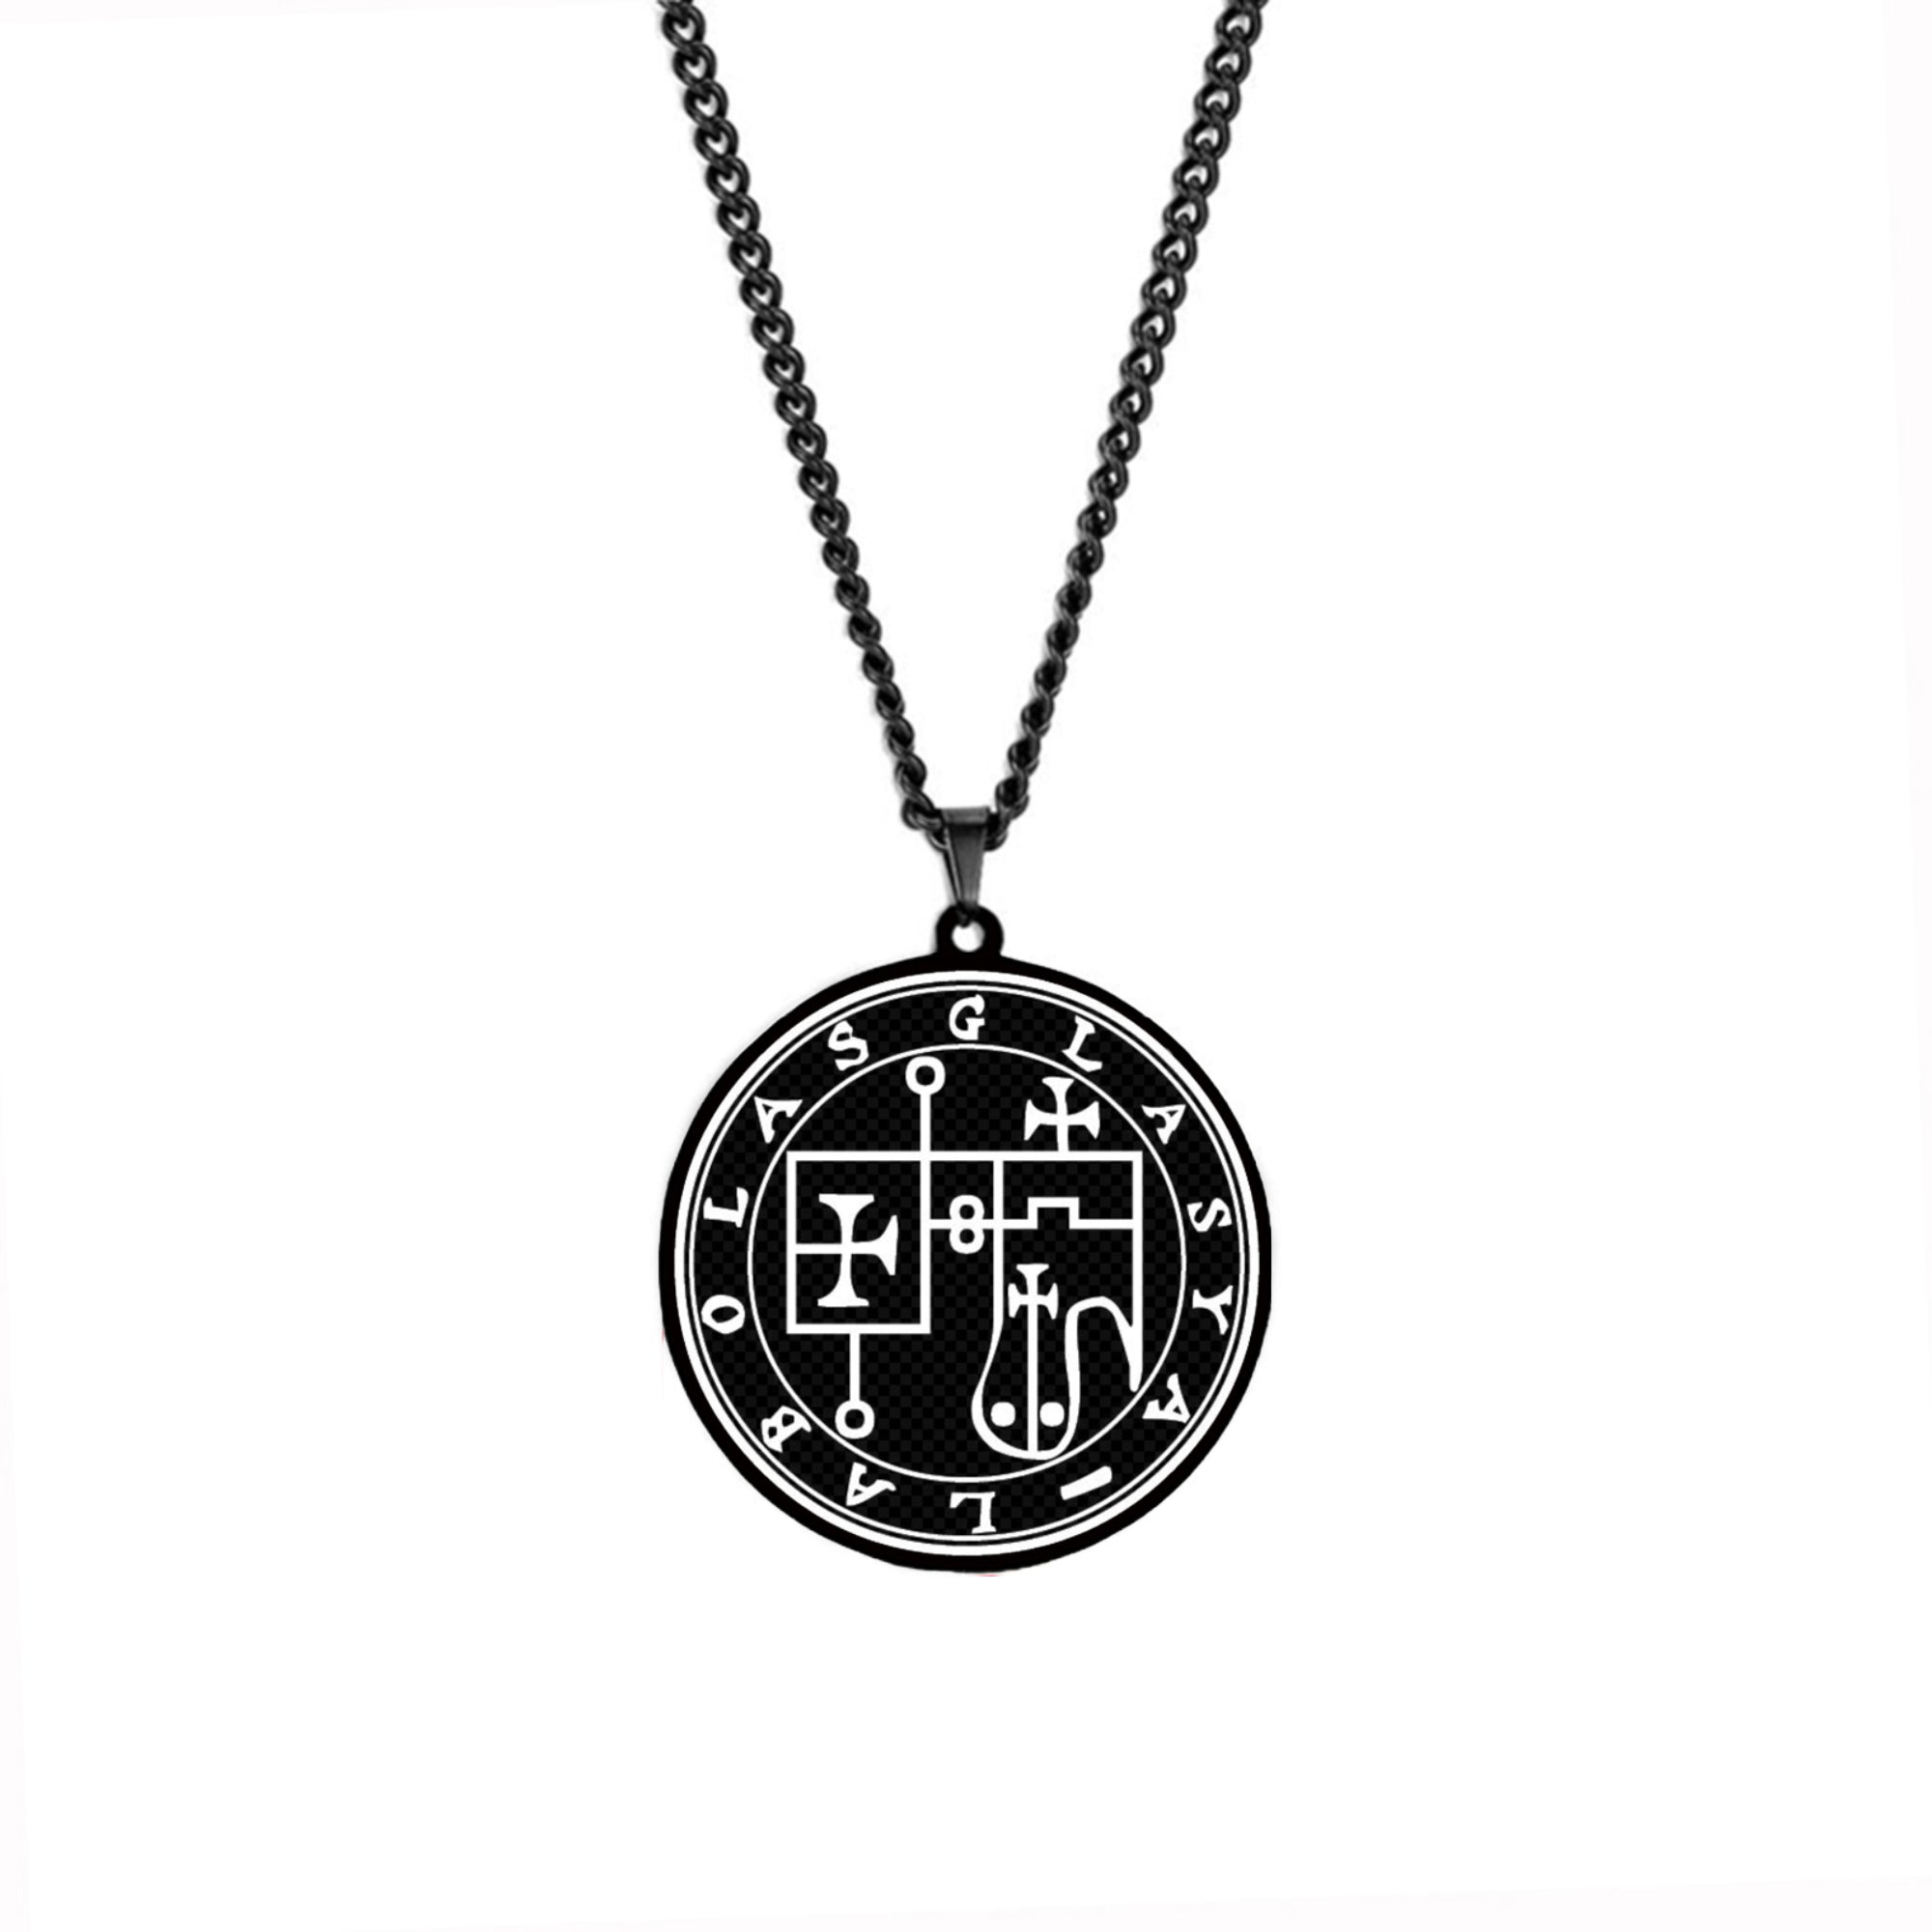 Necklaces Of The Lesser Key Of Solomon | Pendants With 72 Demon Sigils From Lemegeton | Goetia Amulet Talisman For Gothic Men | Apollo Tarot Jewelry Shop